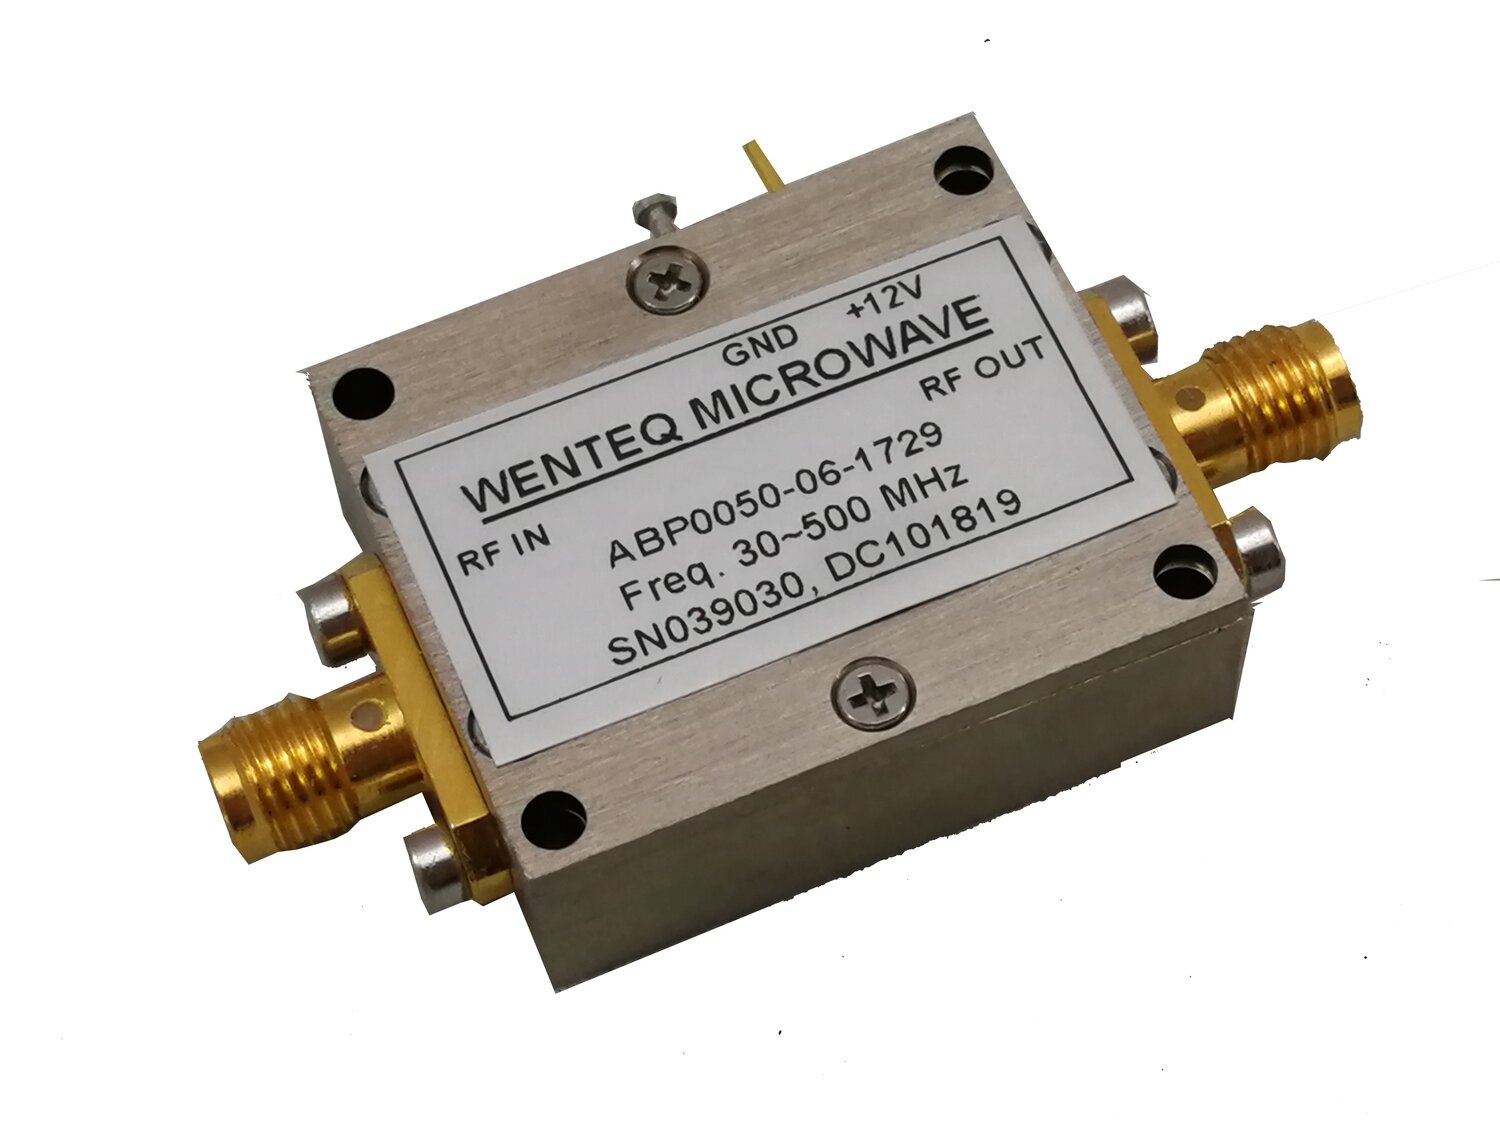 Broadband Power Amplifier
Abp0050-06-1729